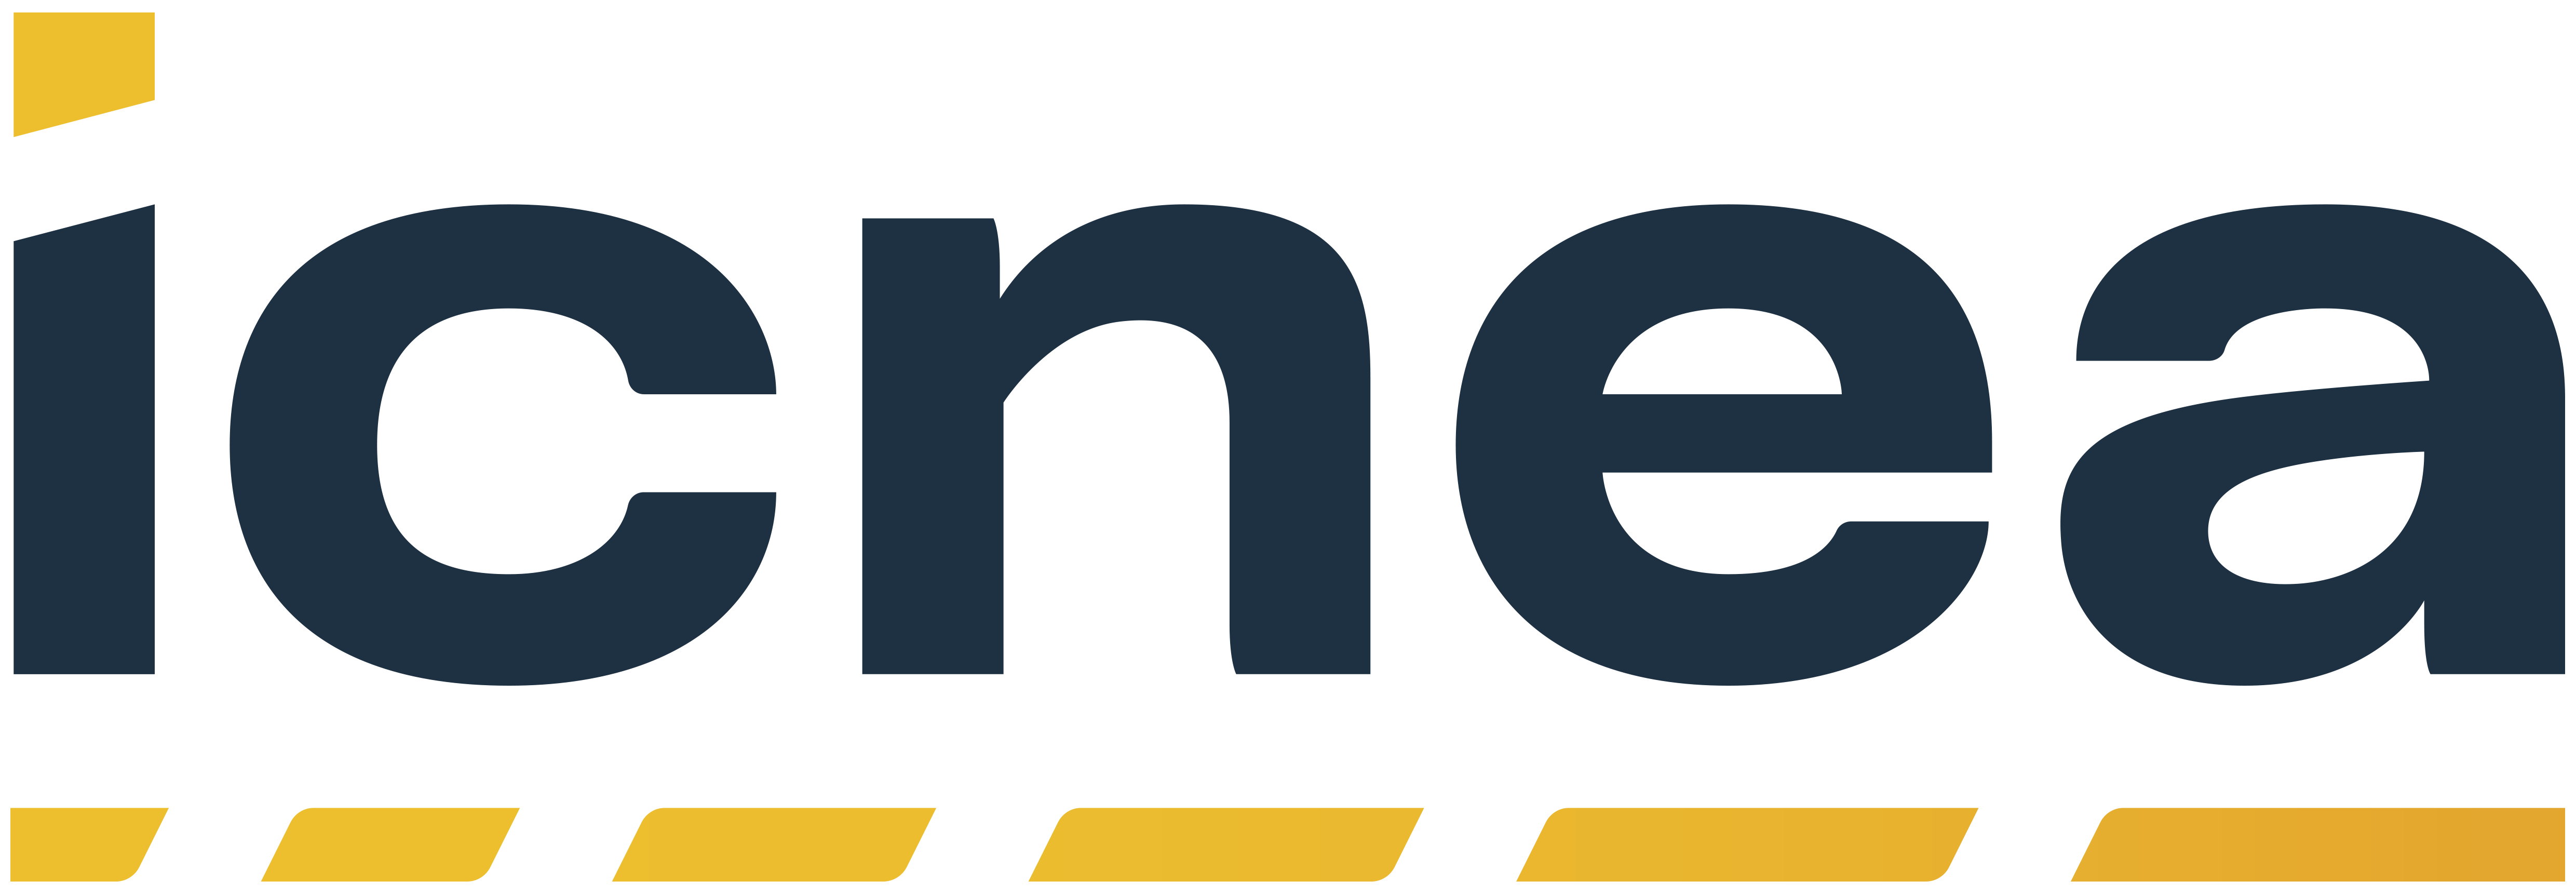 logo Icnea